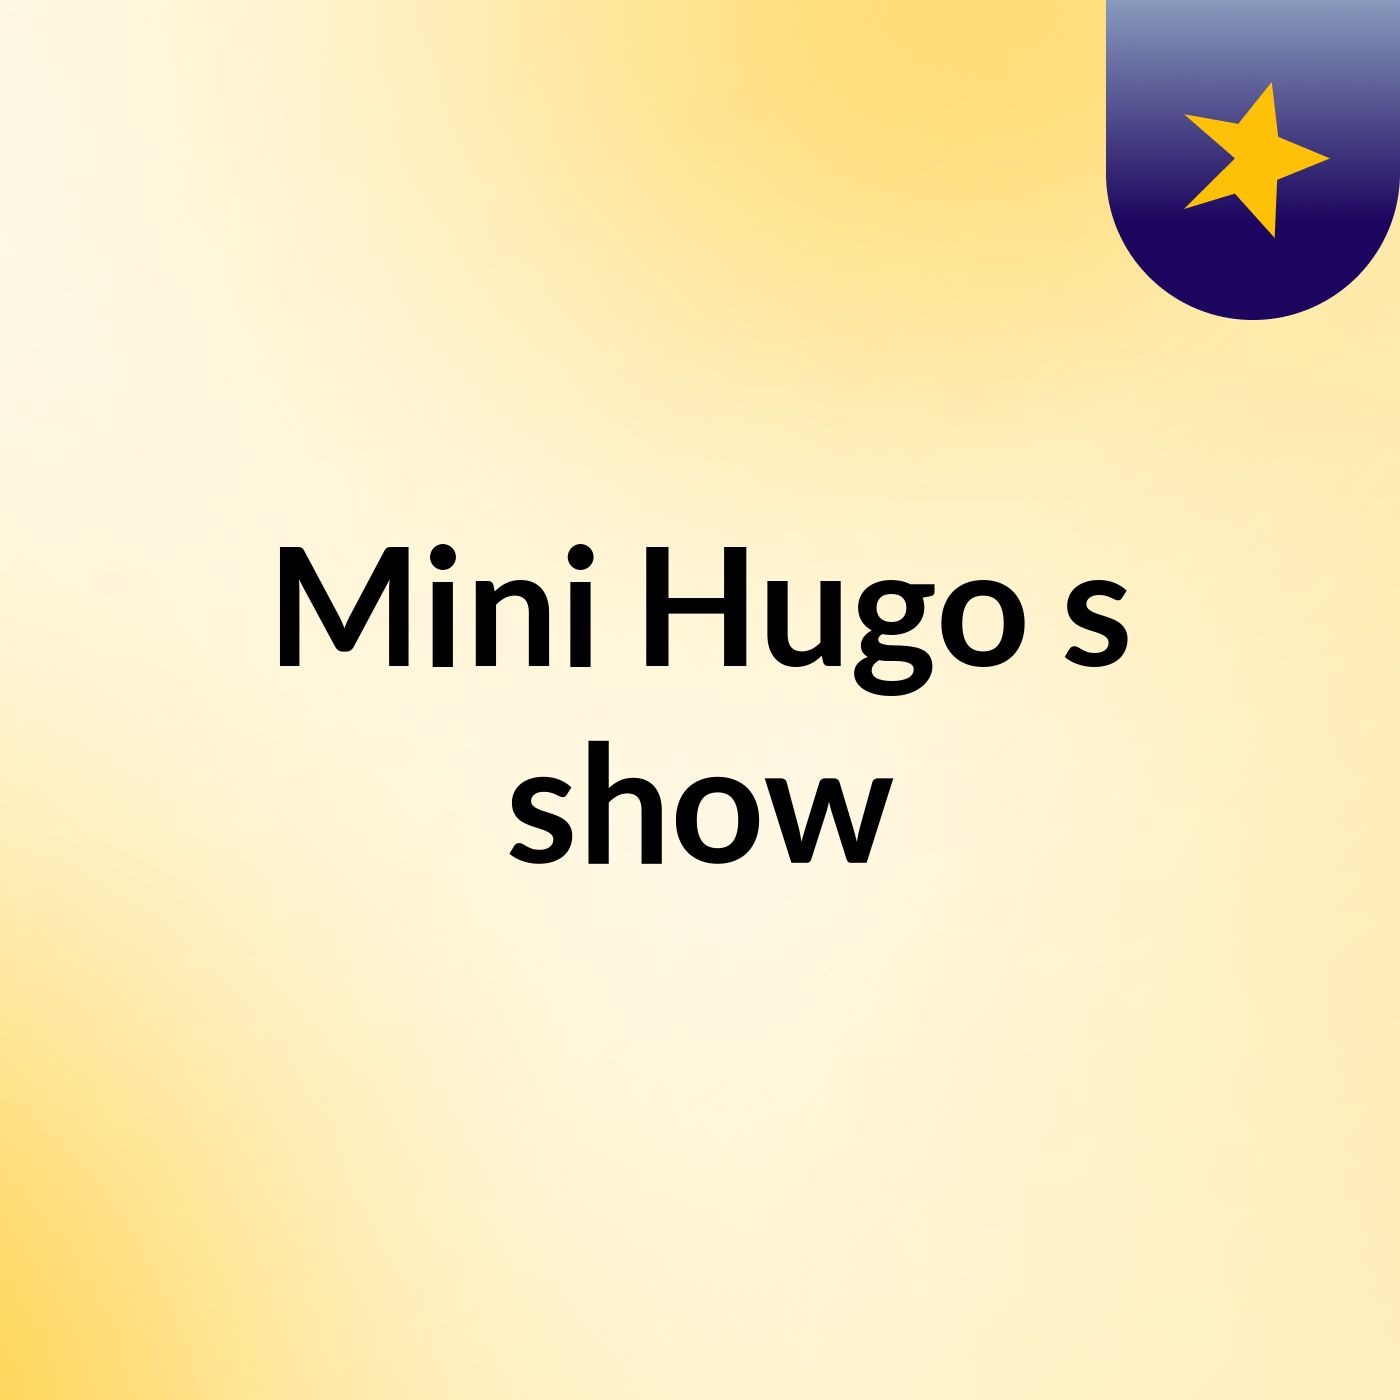 Mini Hugo's show